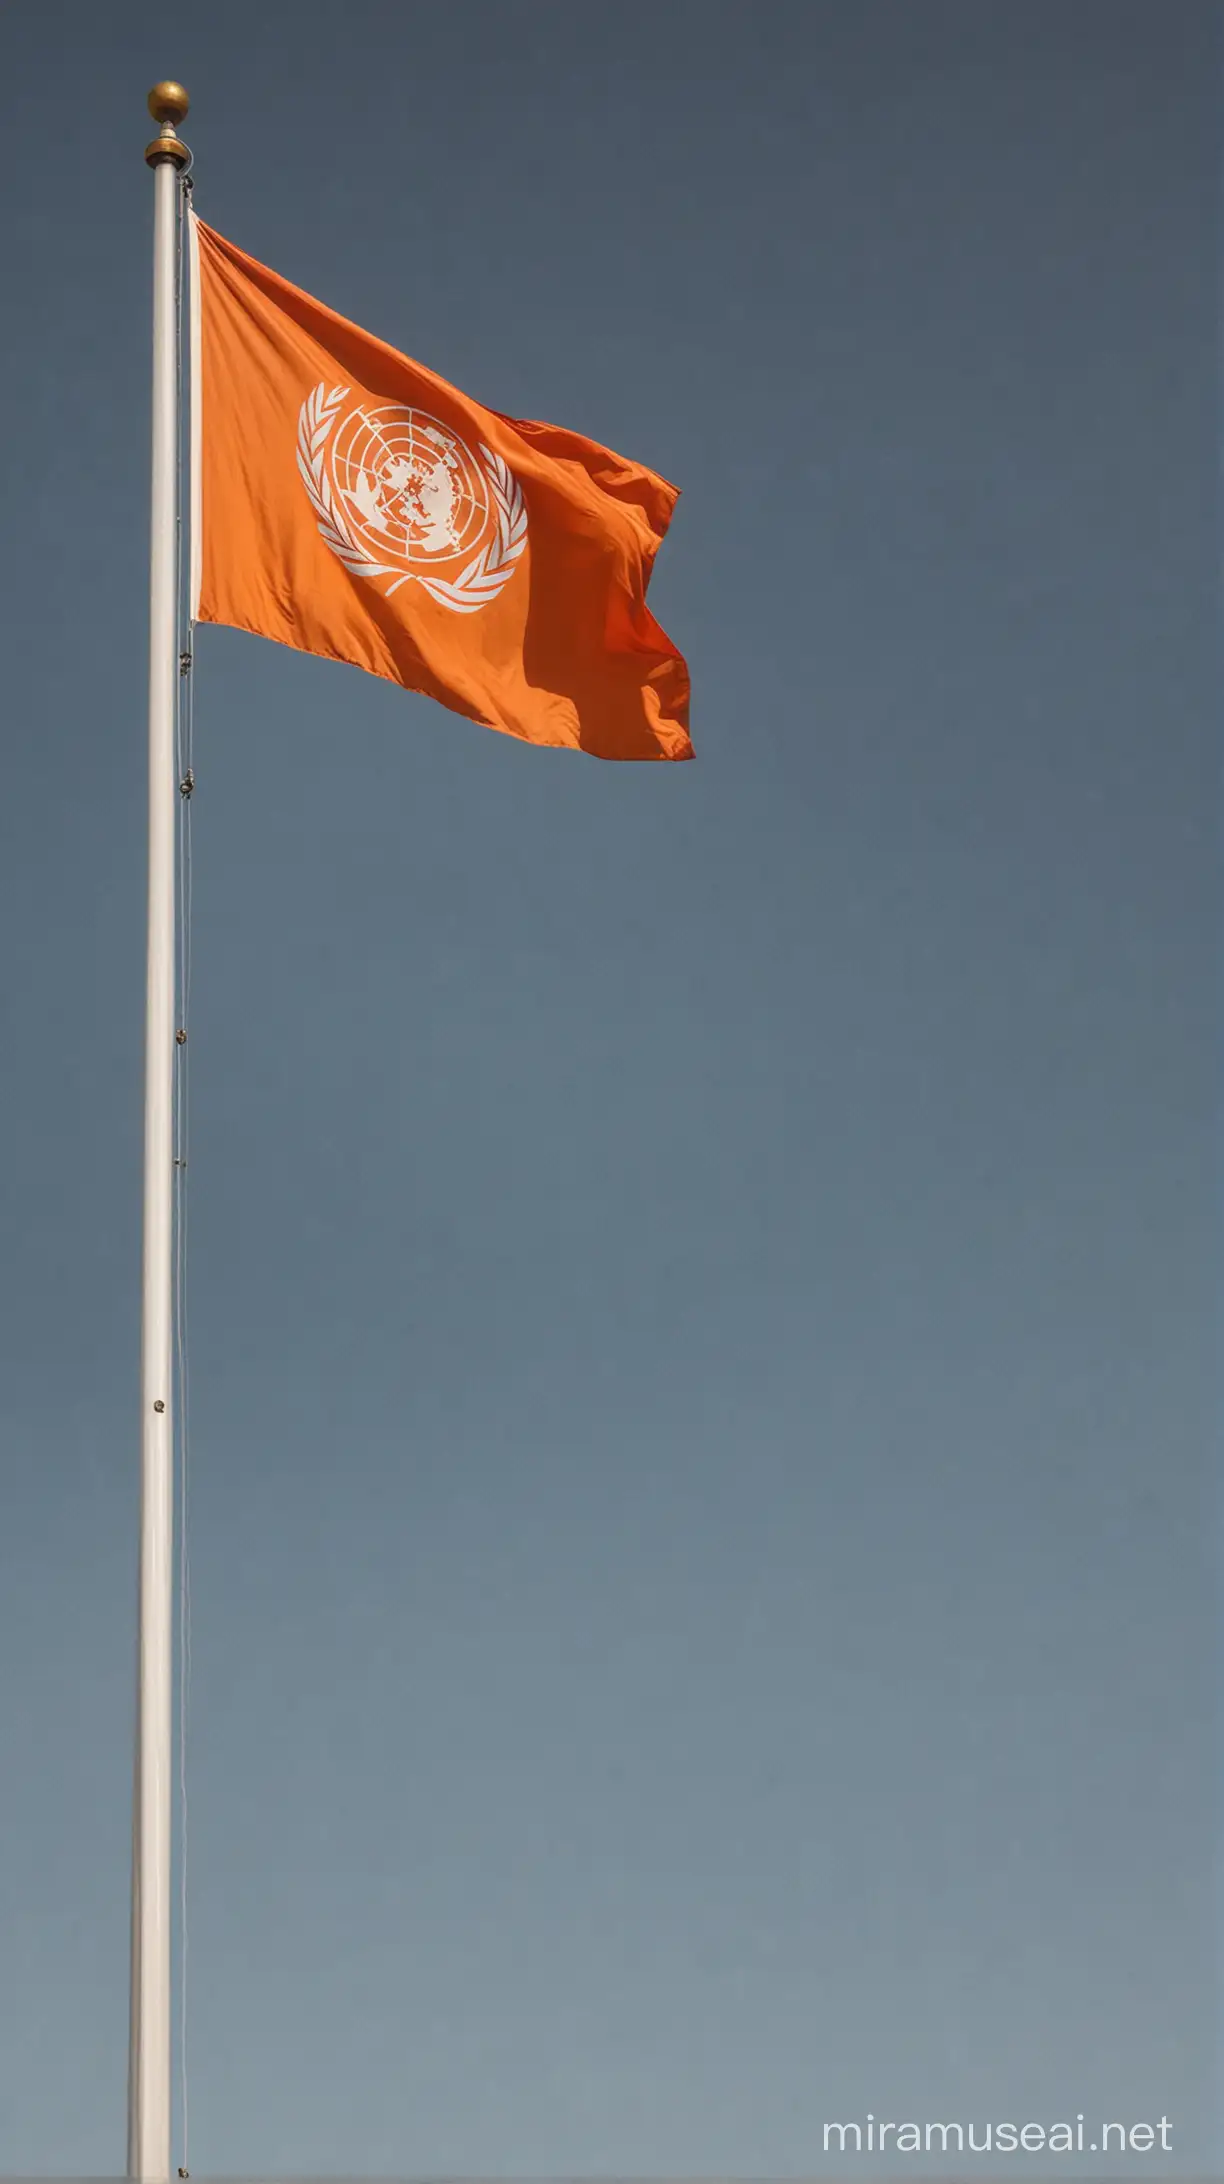 United Nations Flag in Vibrant Orange